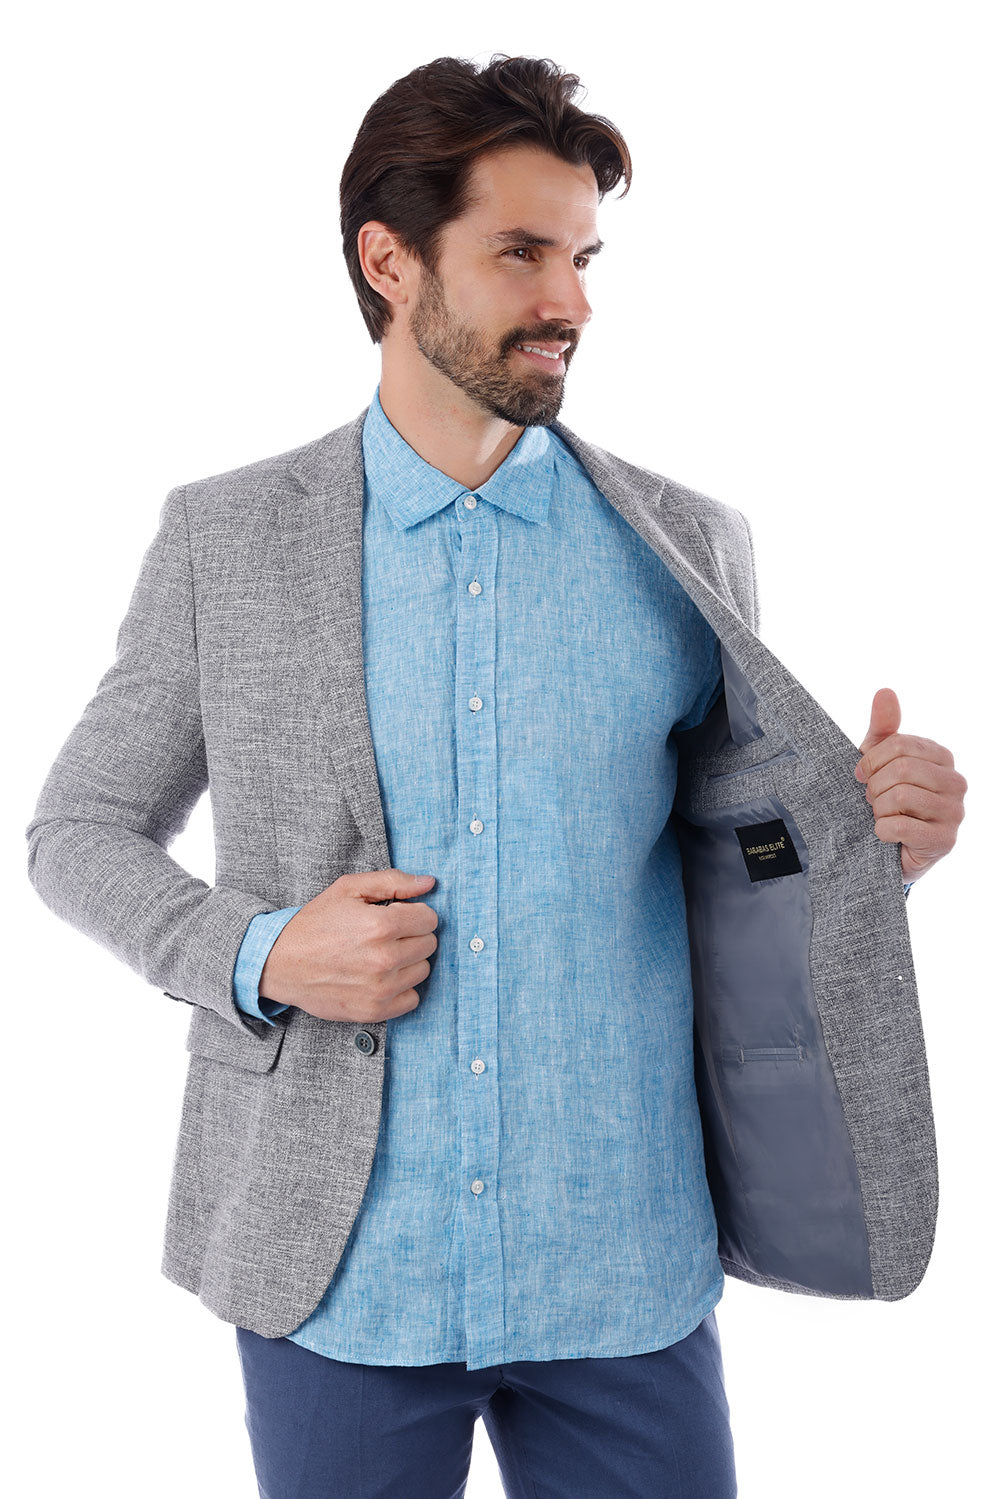 Barabas Men's Classic Tweed Pattern Notch Lapel Blazer 4BL30 Grey